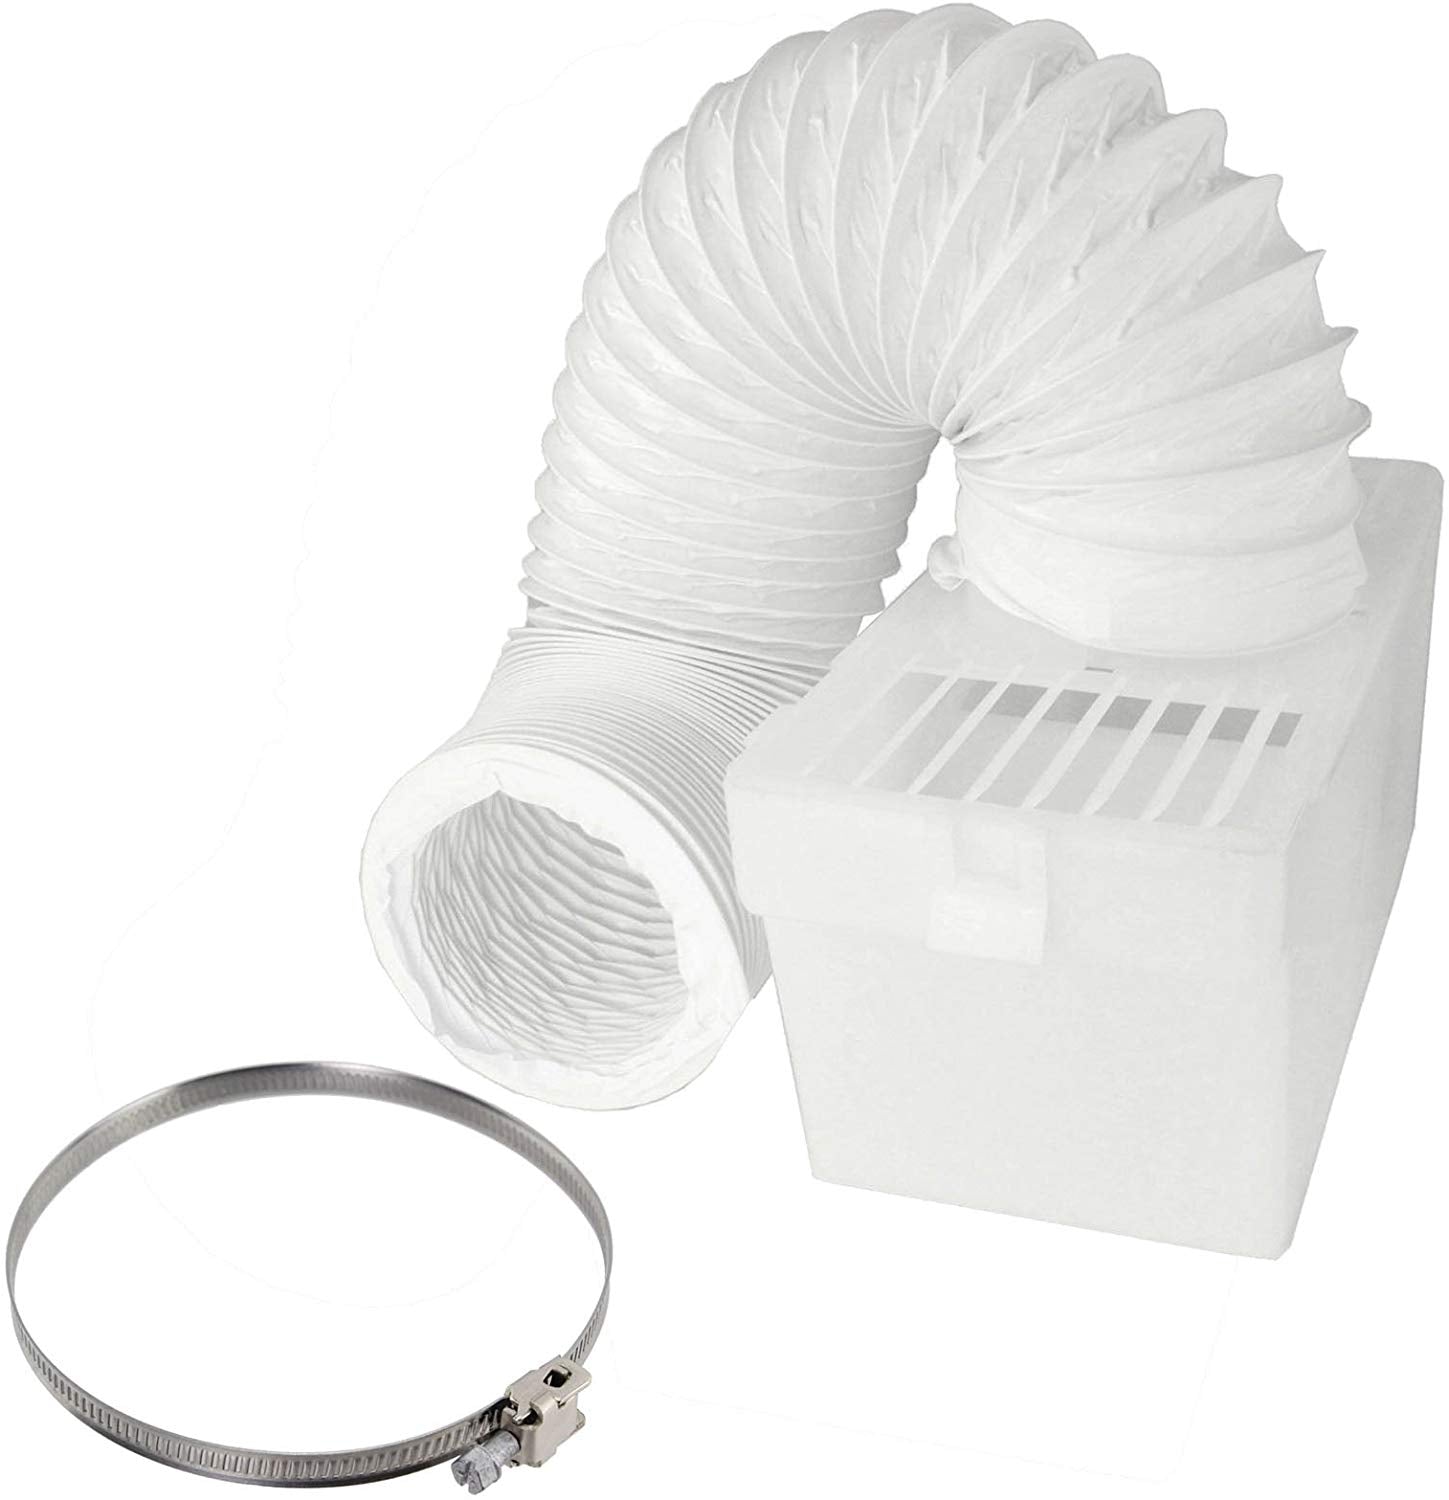 Condenser Vent Box & Hose Kit With Screw Clip for AEG Vented Tumble Dryer (4" / 100mm Diameter)